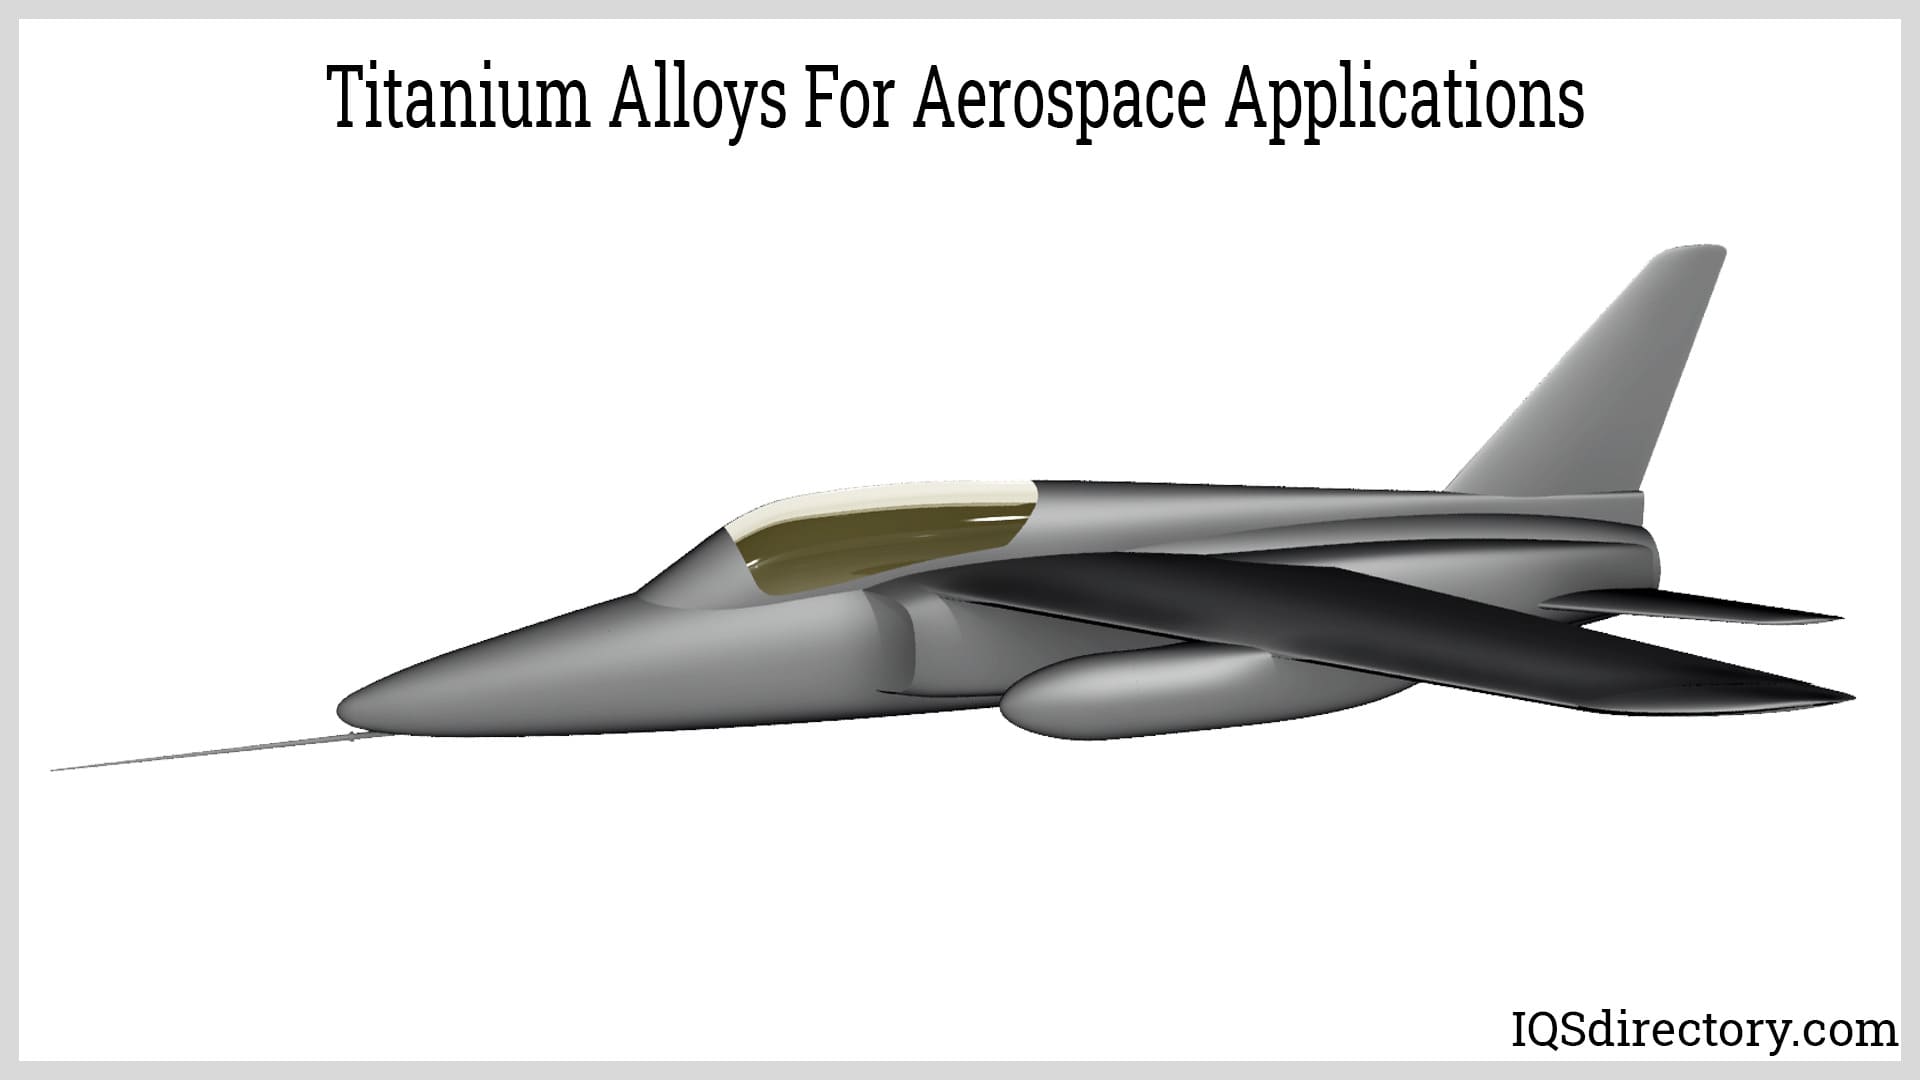 Titanium alloys for aerospace applications